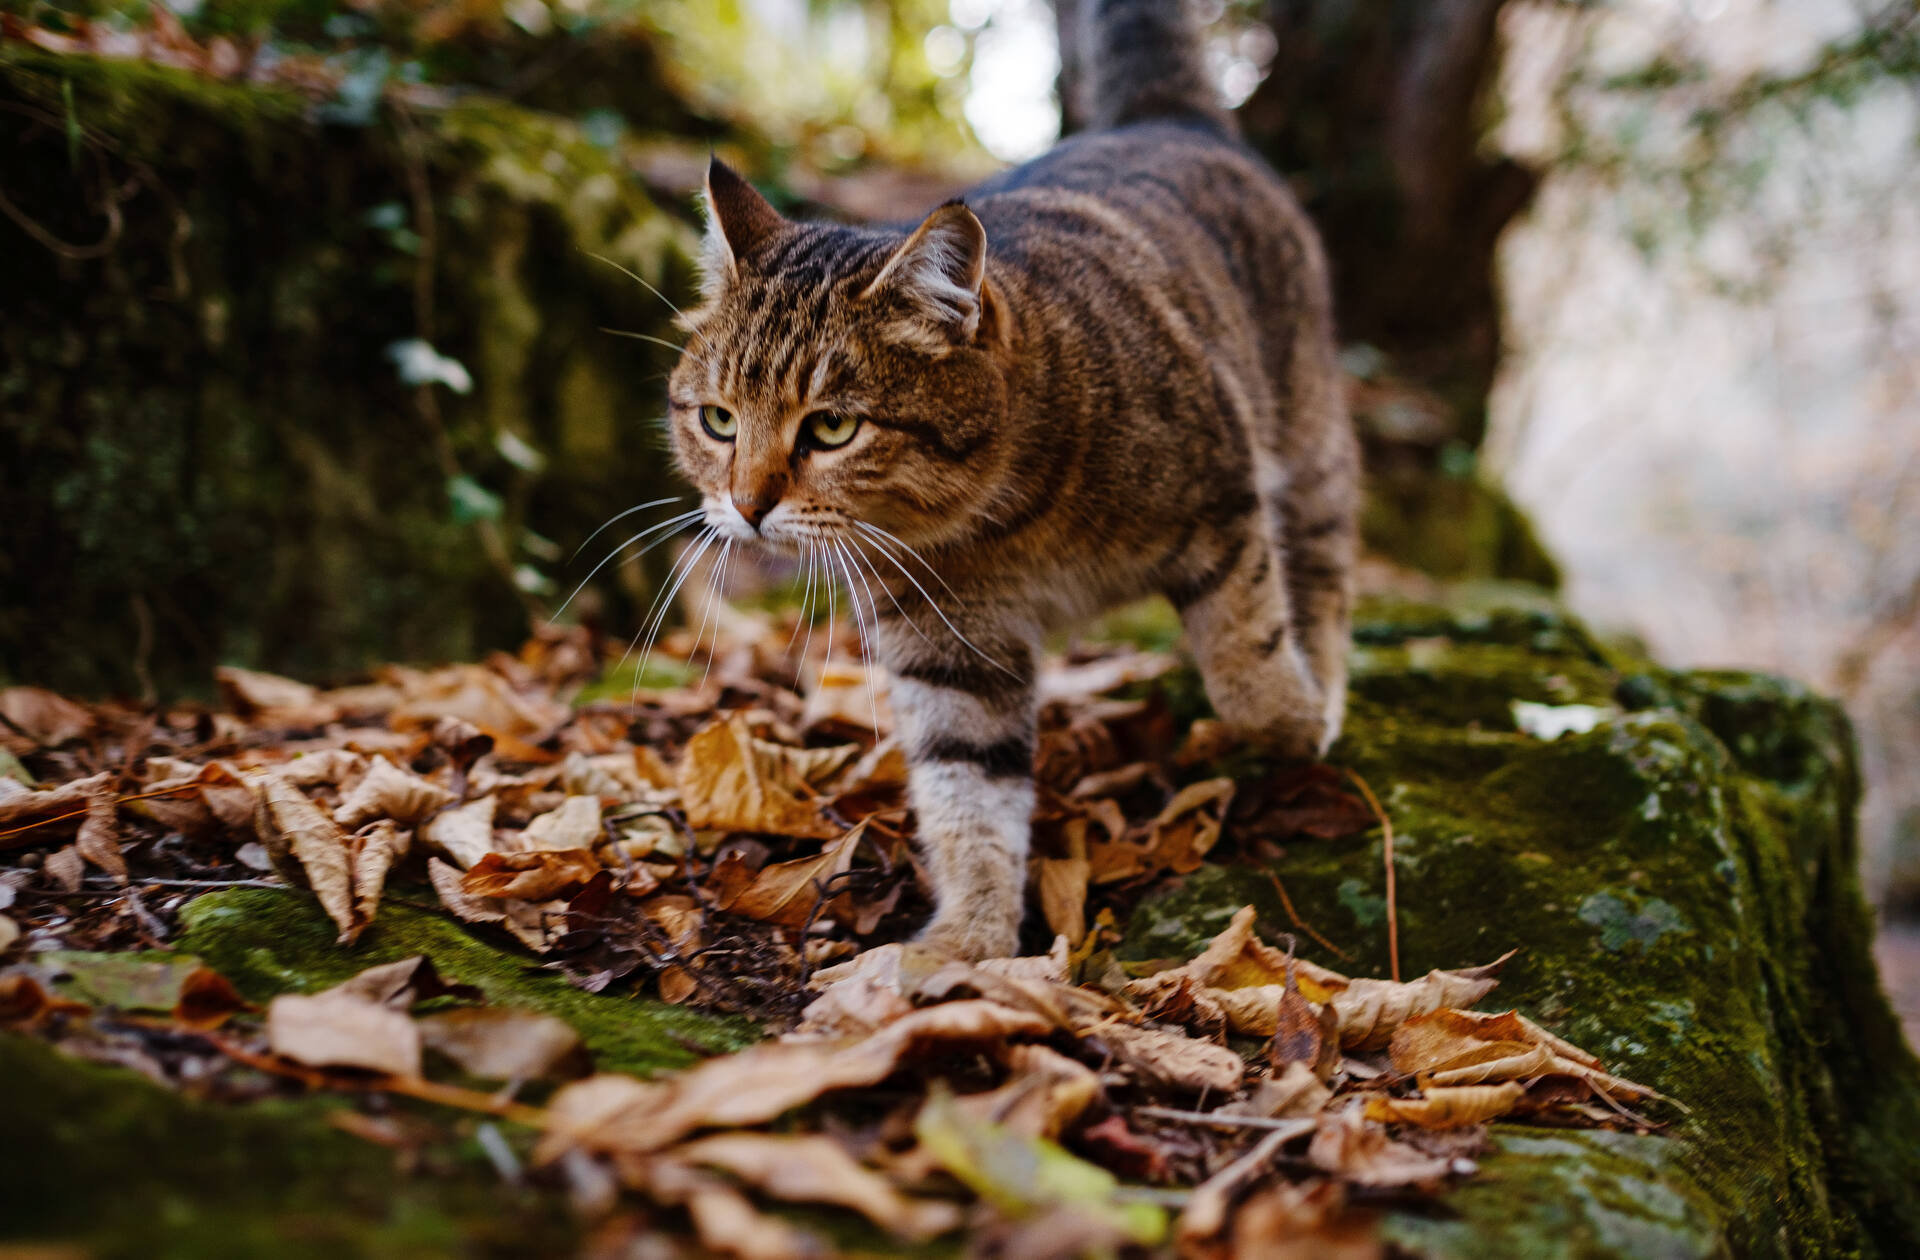 An outdoor cat exploring their territory